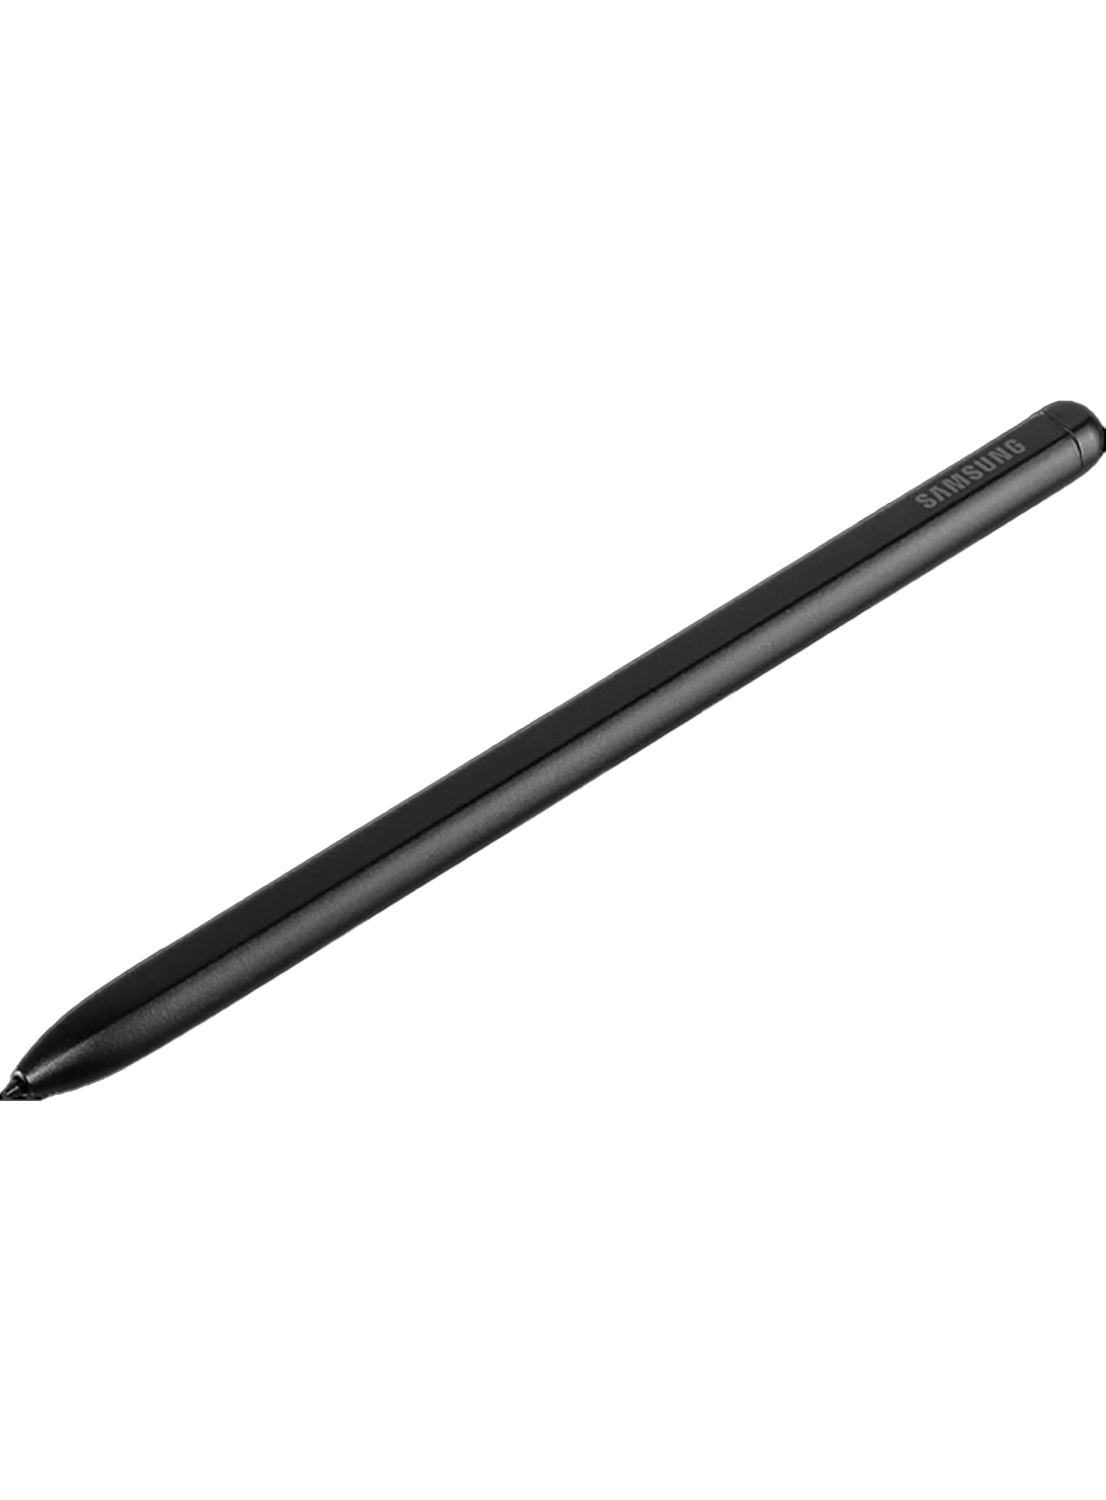 Original Samsung Galaxy Tab S8, S8+, S8 Ultra S Pen EJ-PT870 schwarz GH96-14921A